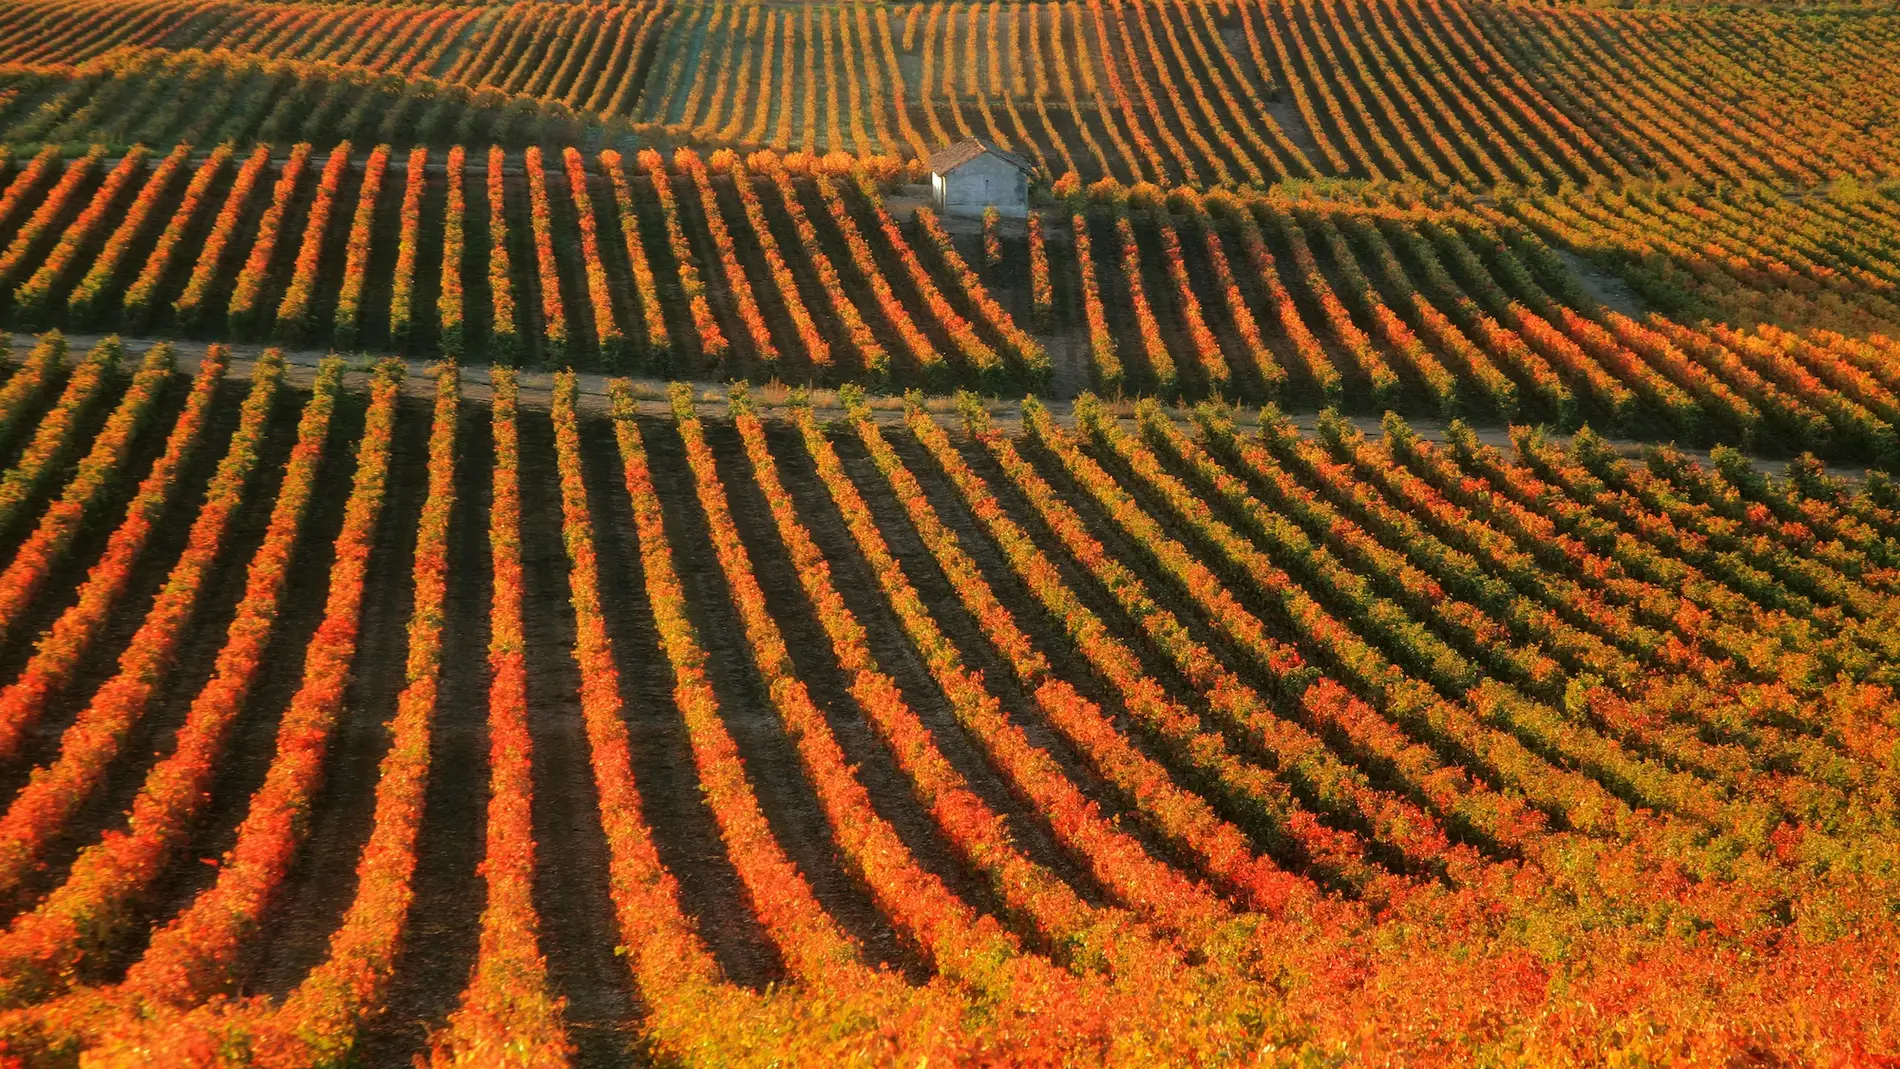 El impresionante paisaje de La Rioja en temporada de vendimia.